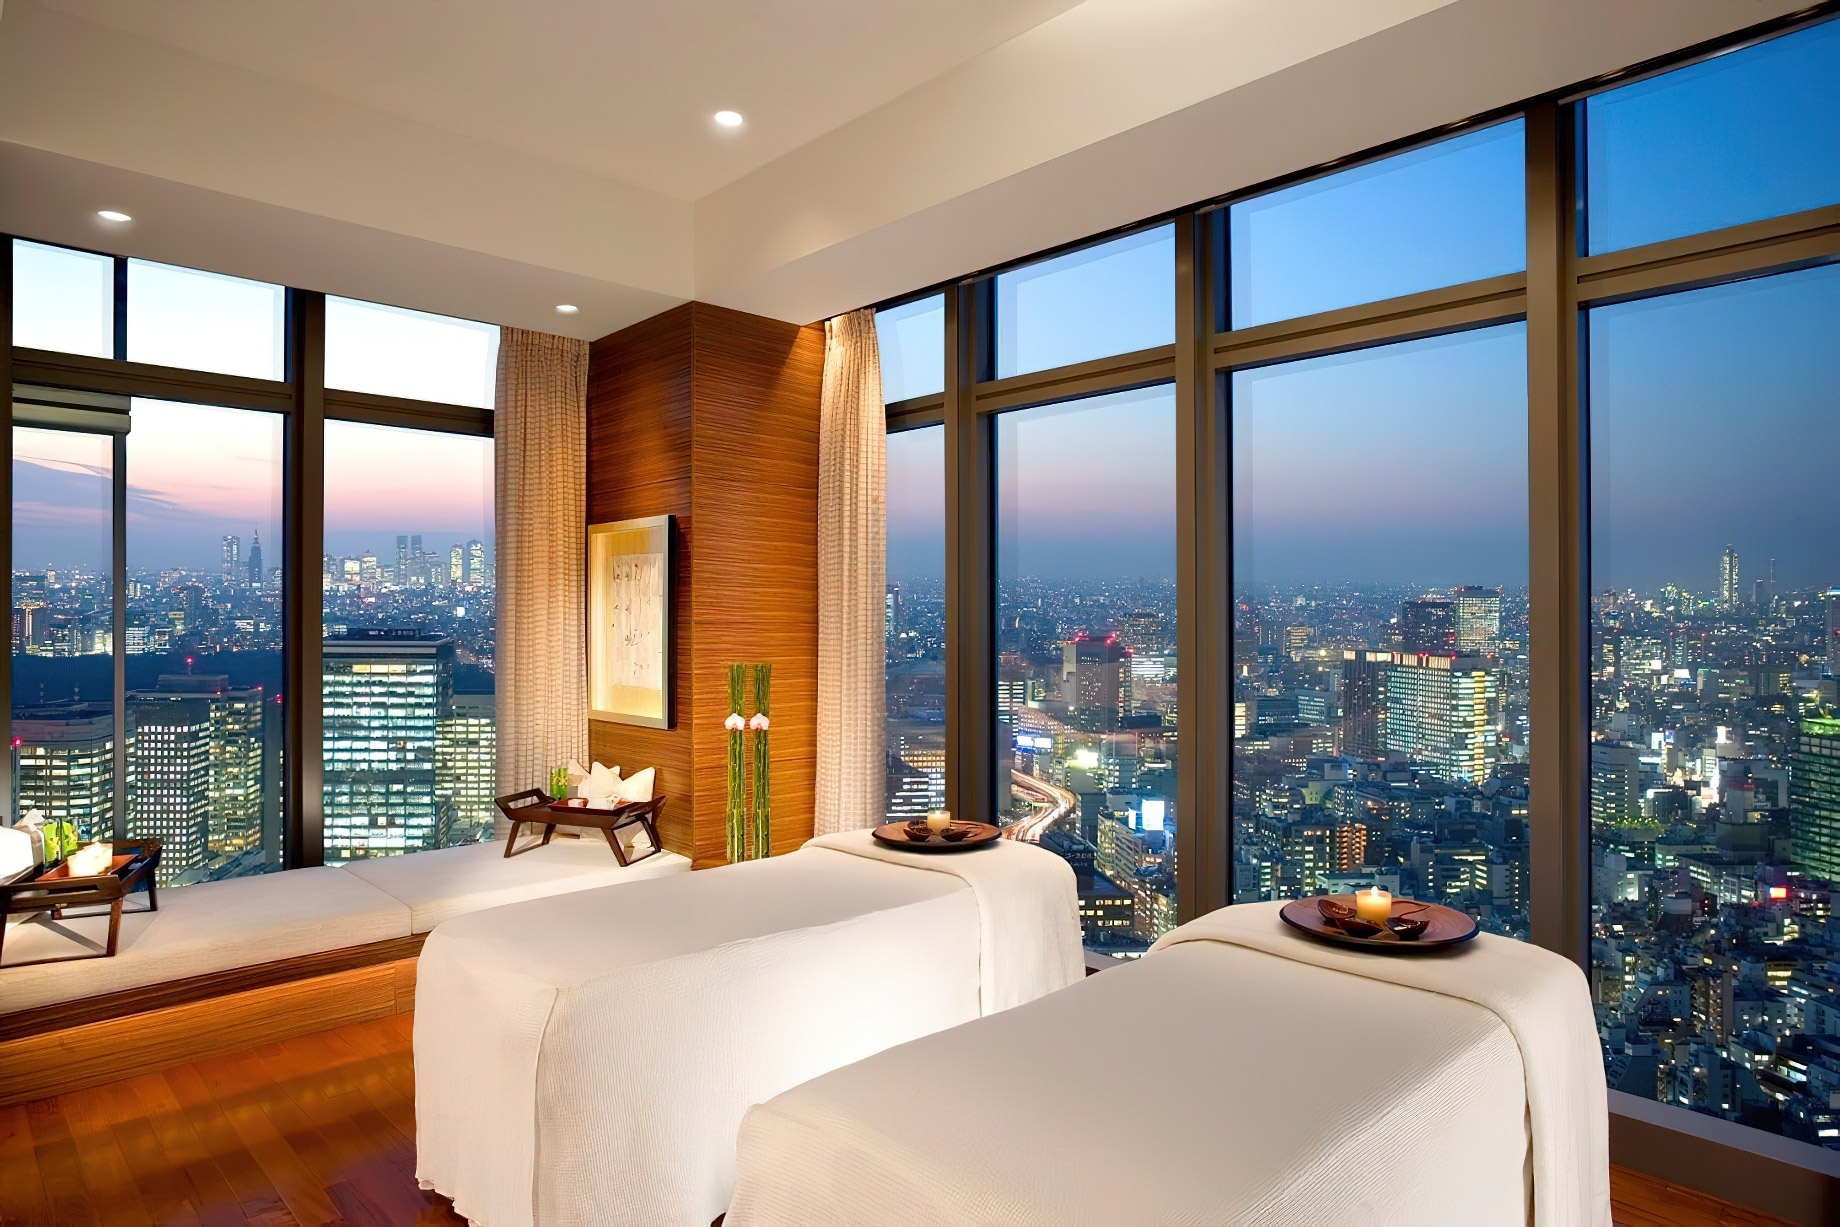 Mandarin Oriental, Tokyo Hotel - Tokyo, Japan - Spa Treatment Room